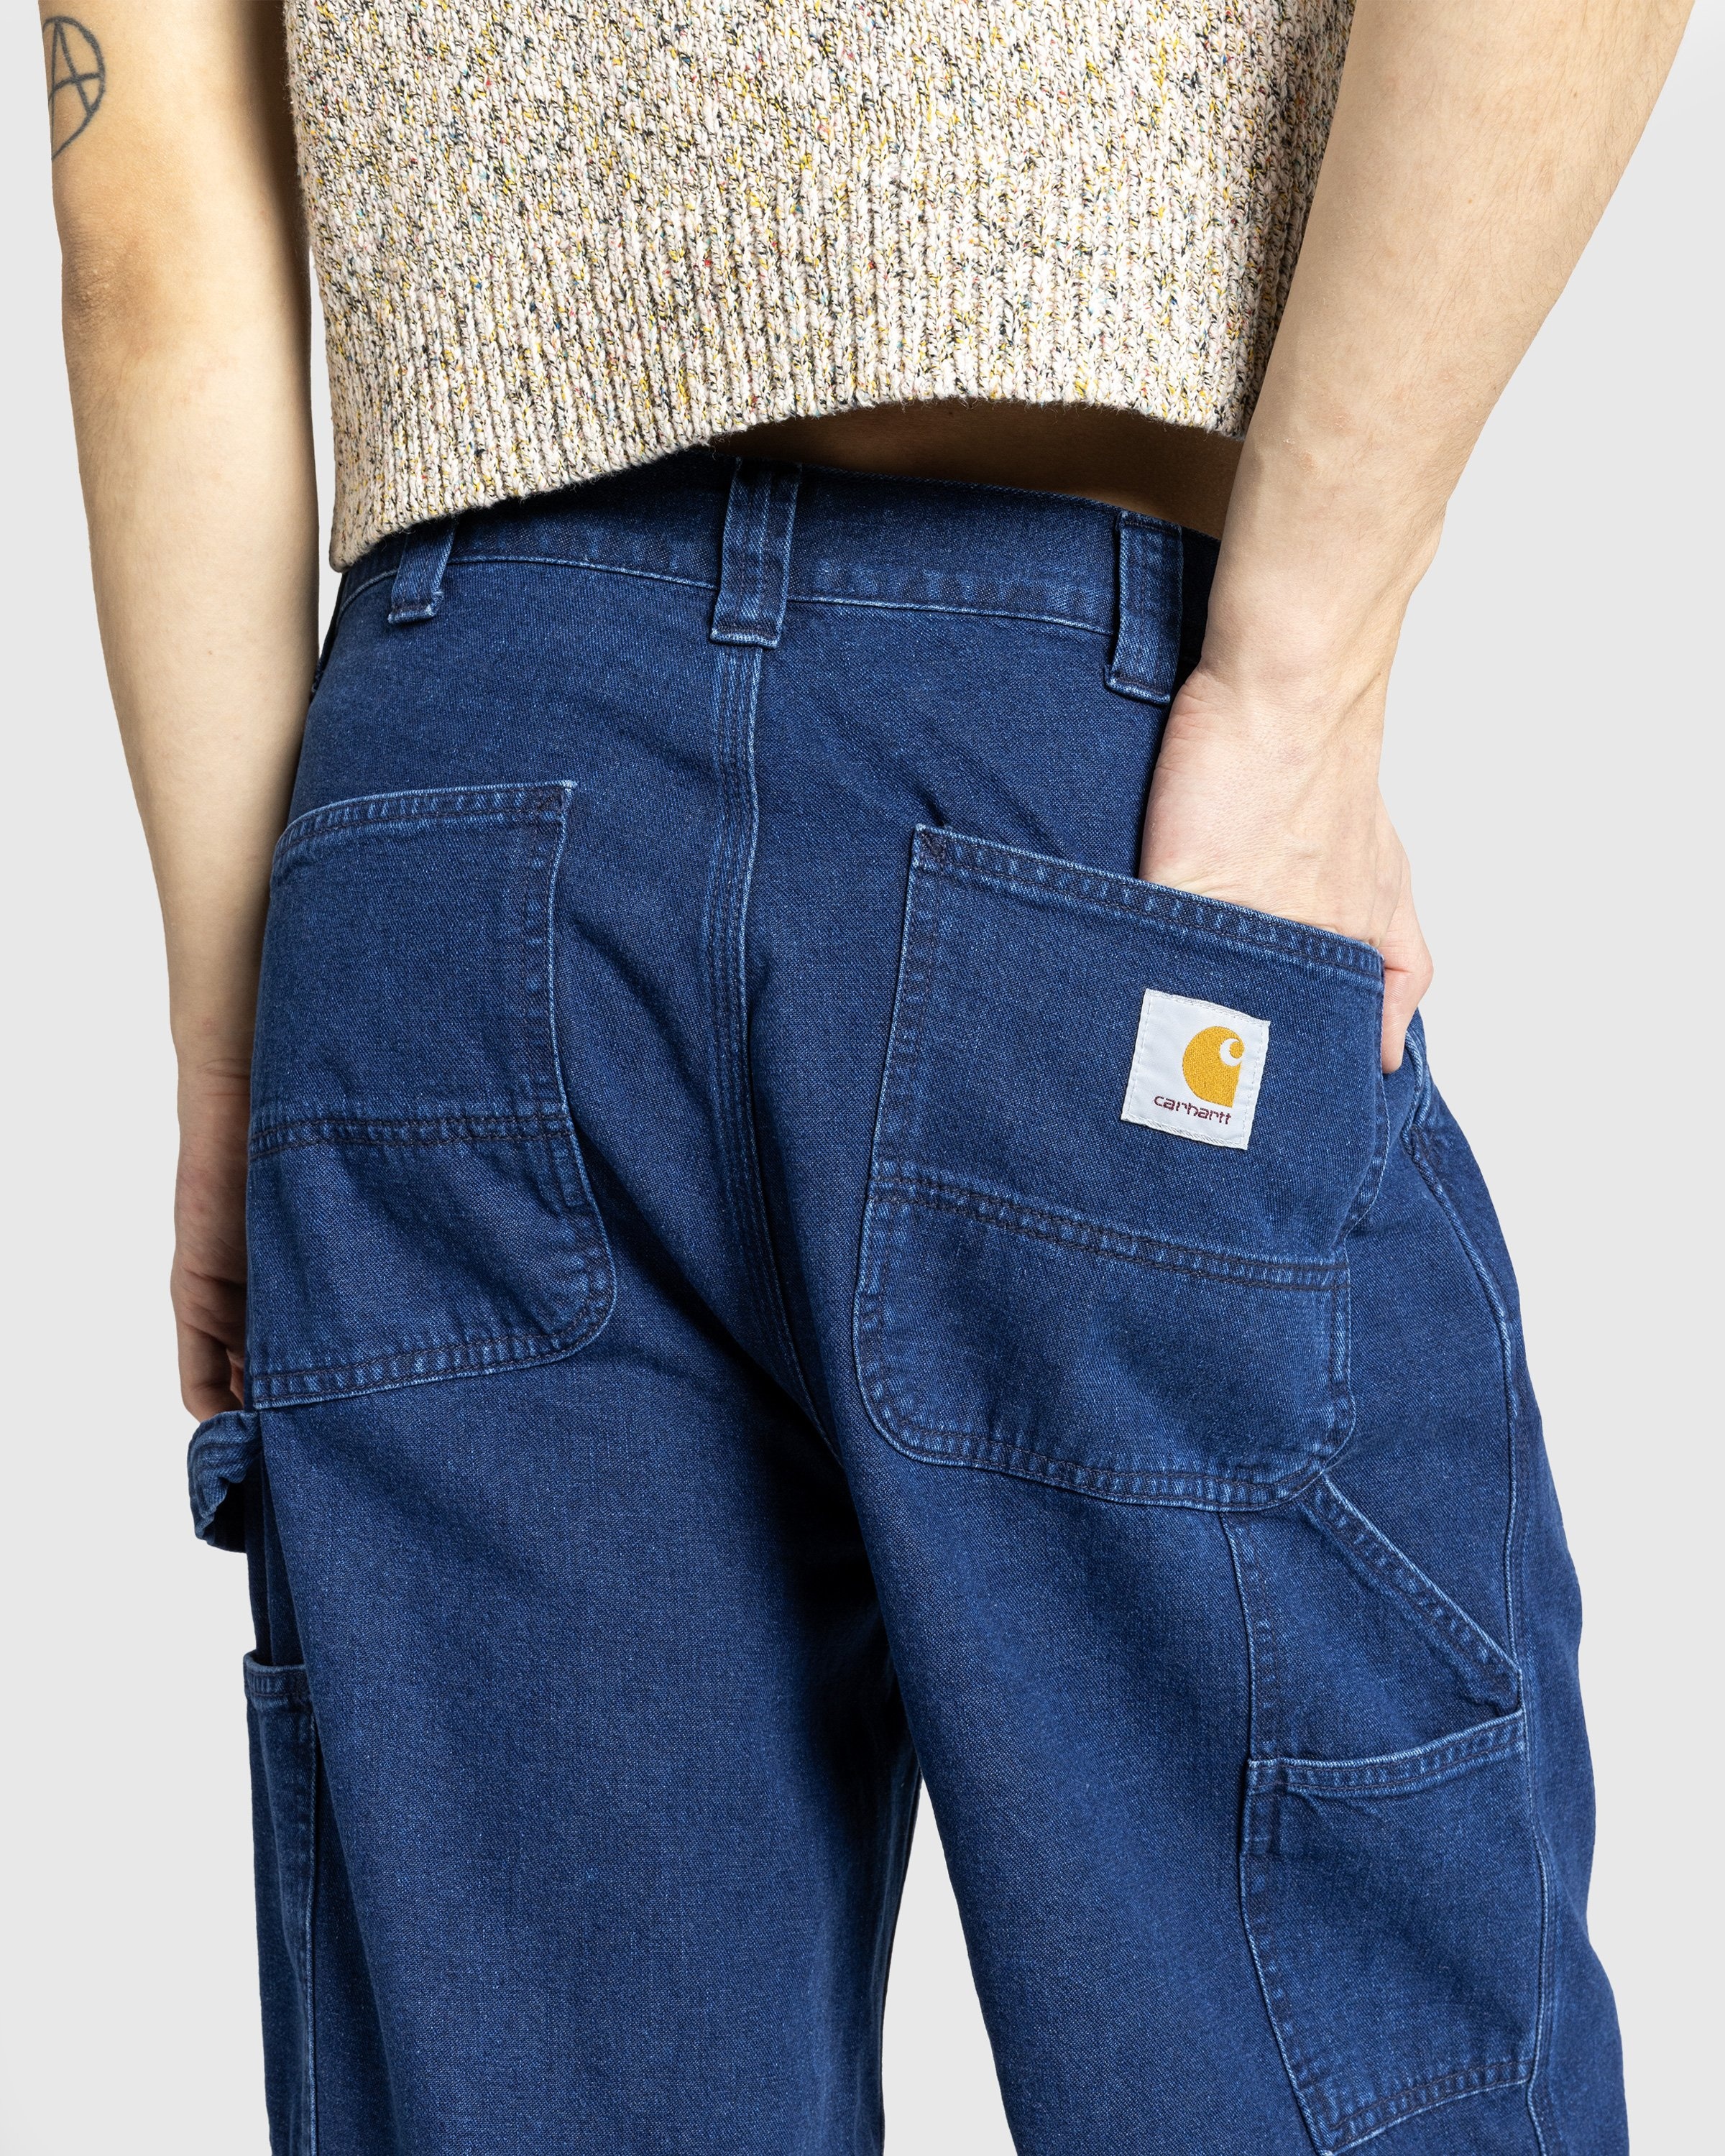 Carhartt WIP – OG Single Knee Pant Blue/Stone Washed - 5